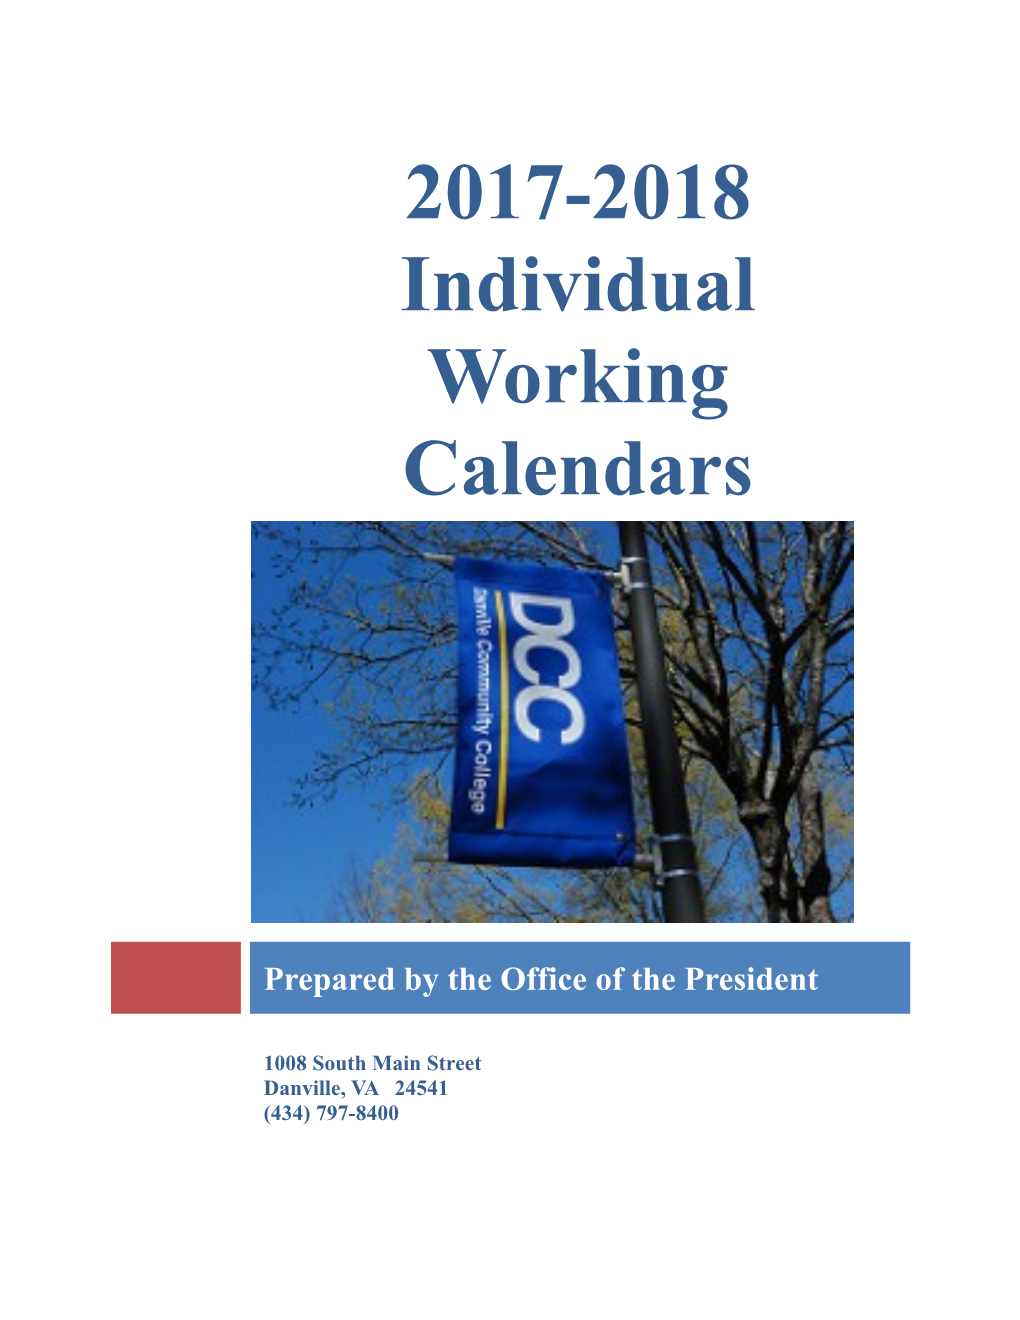 Individual Working Calendars